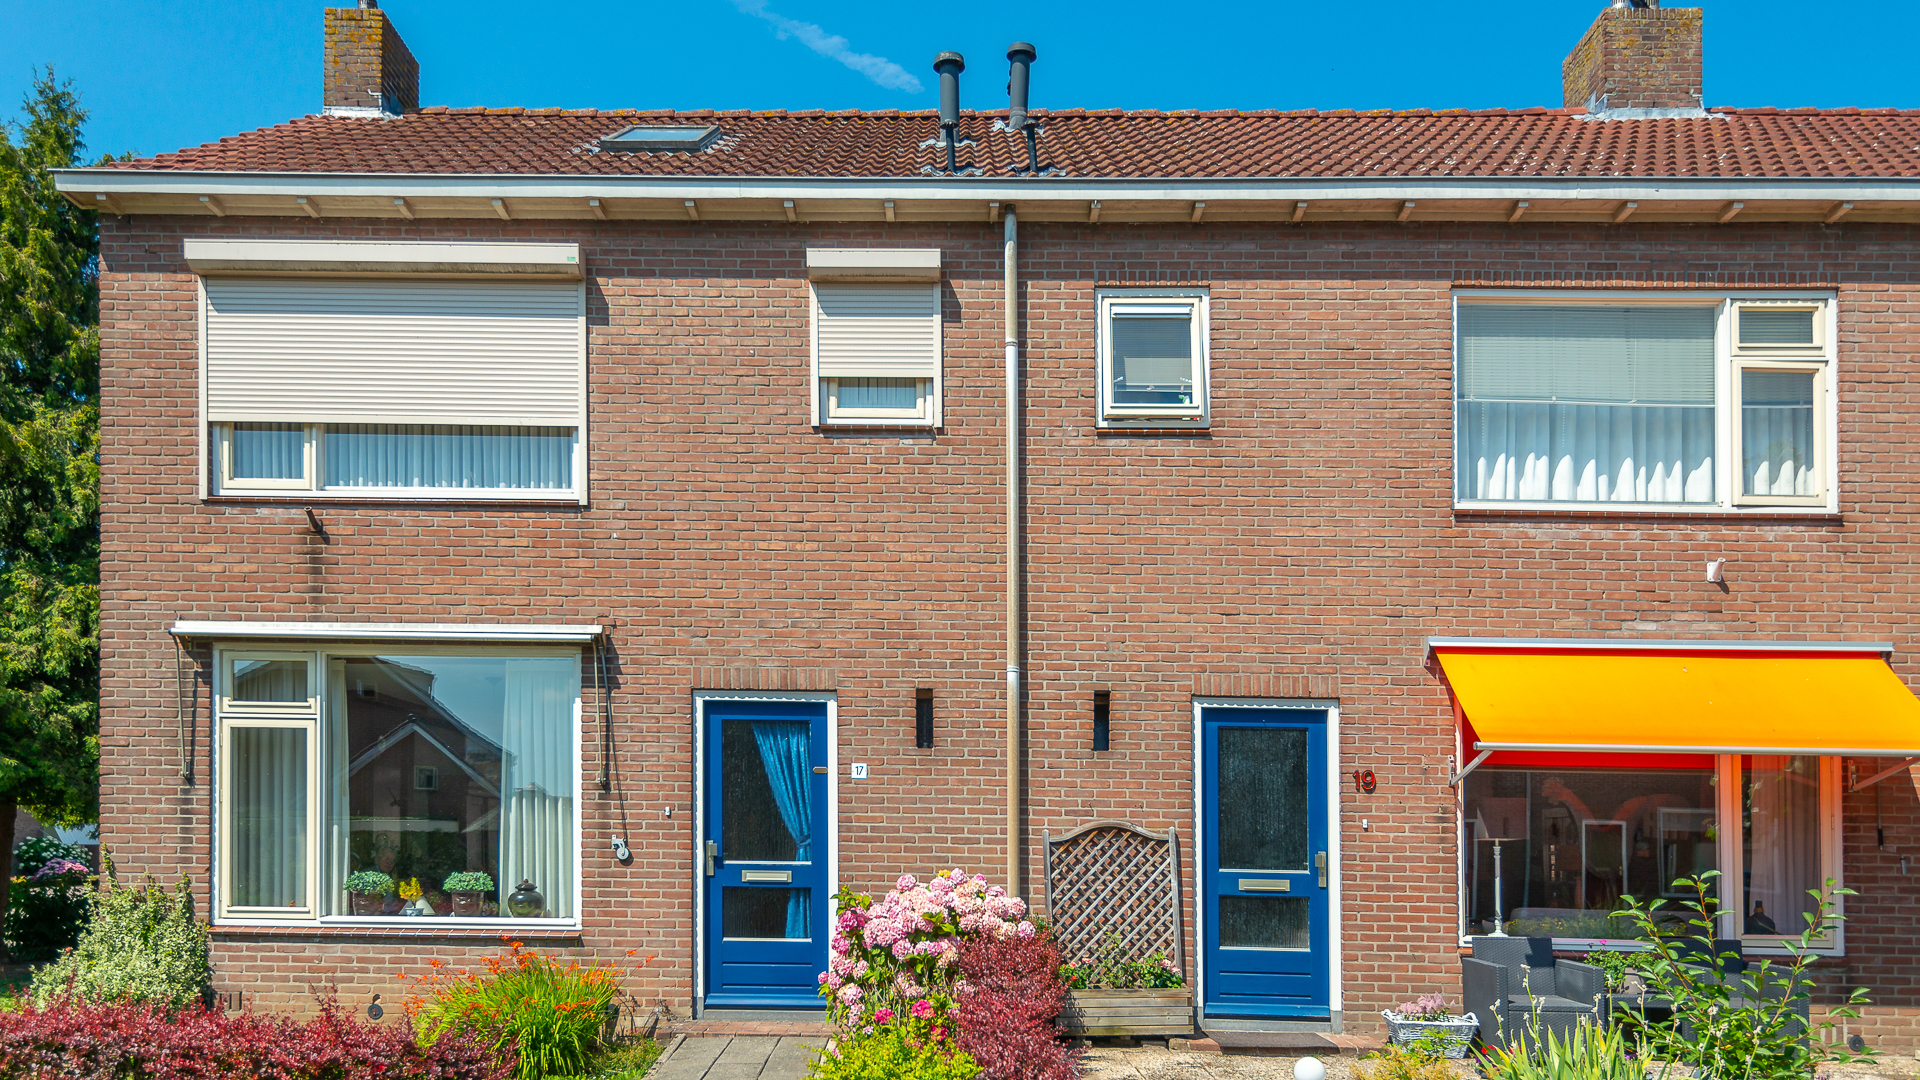 Oranjestraat 19, 8281 DR Genemuiden, Nederland